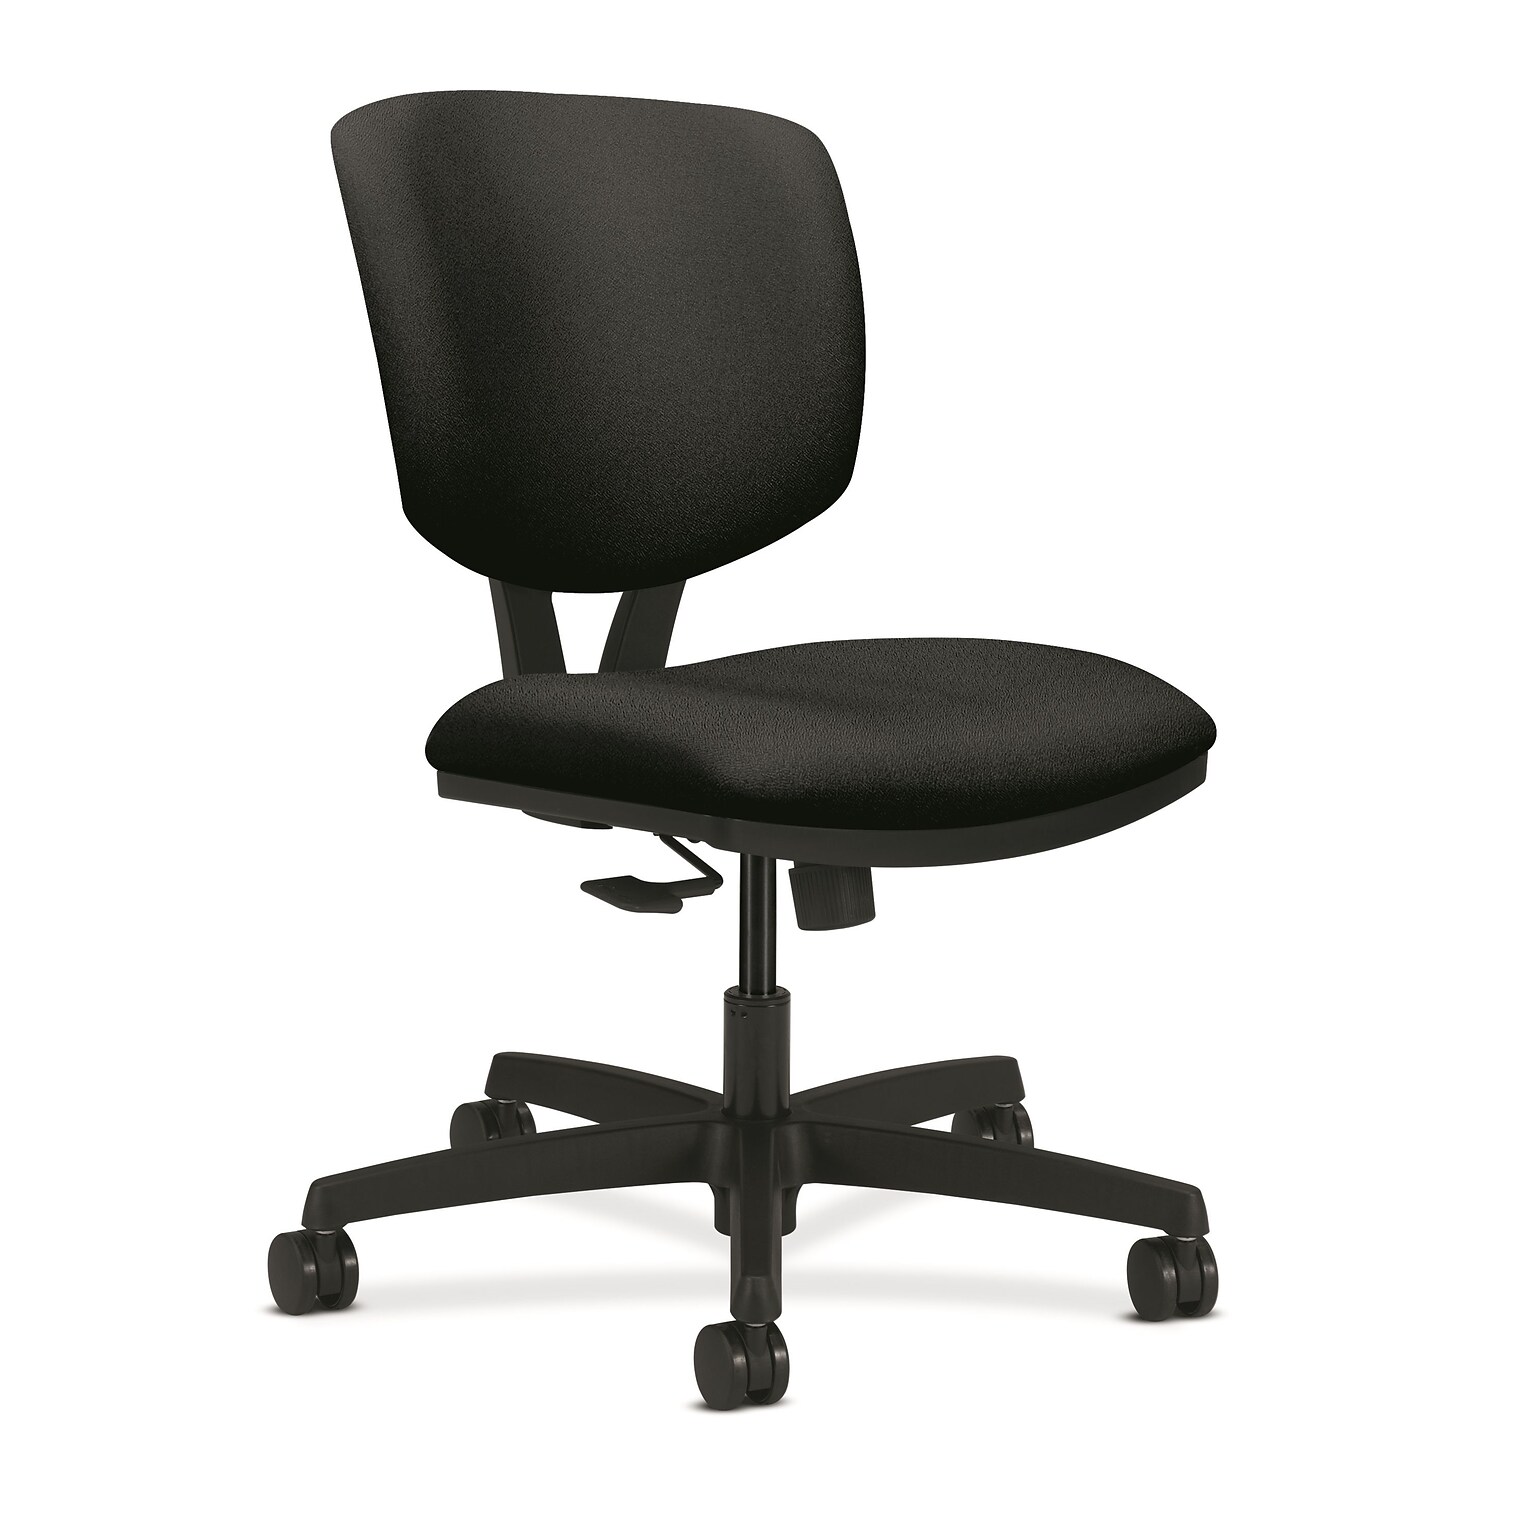 HON® Volt® Office/Computer Chair, Synchro-Tilt, Centurion Black Fabric